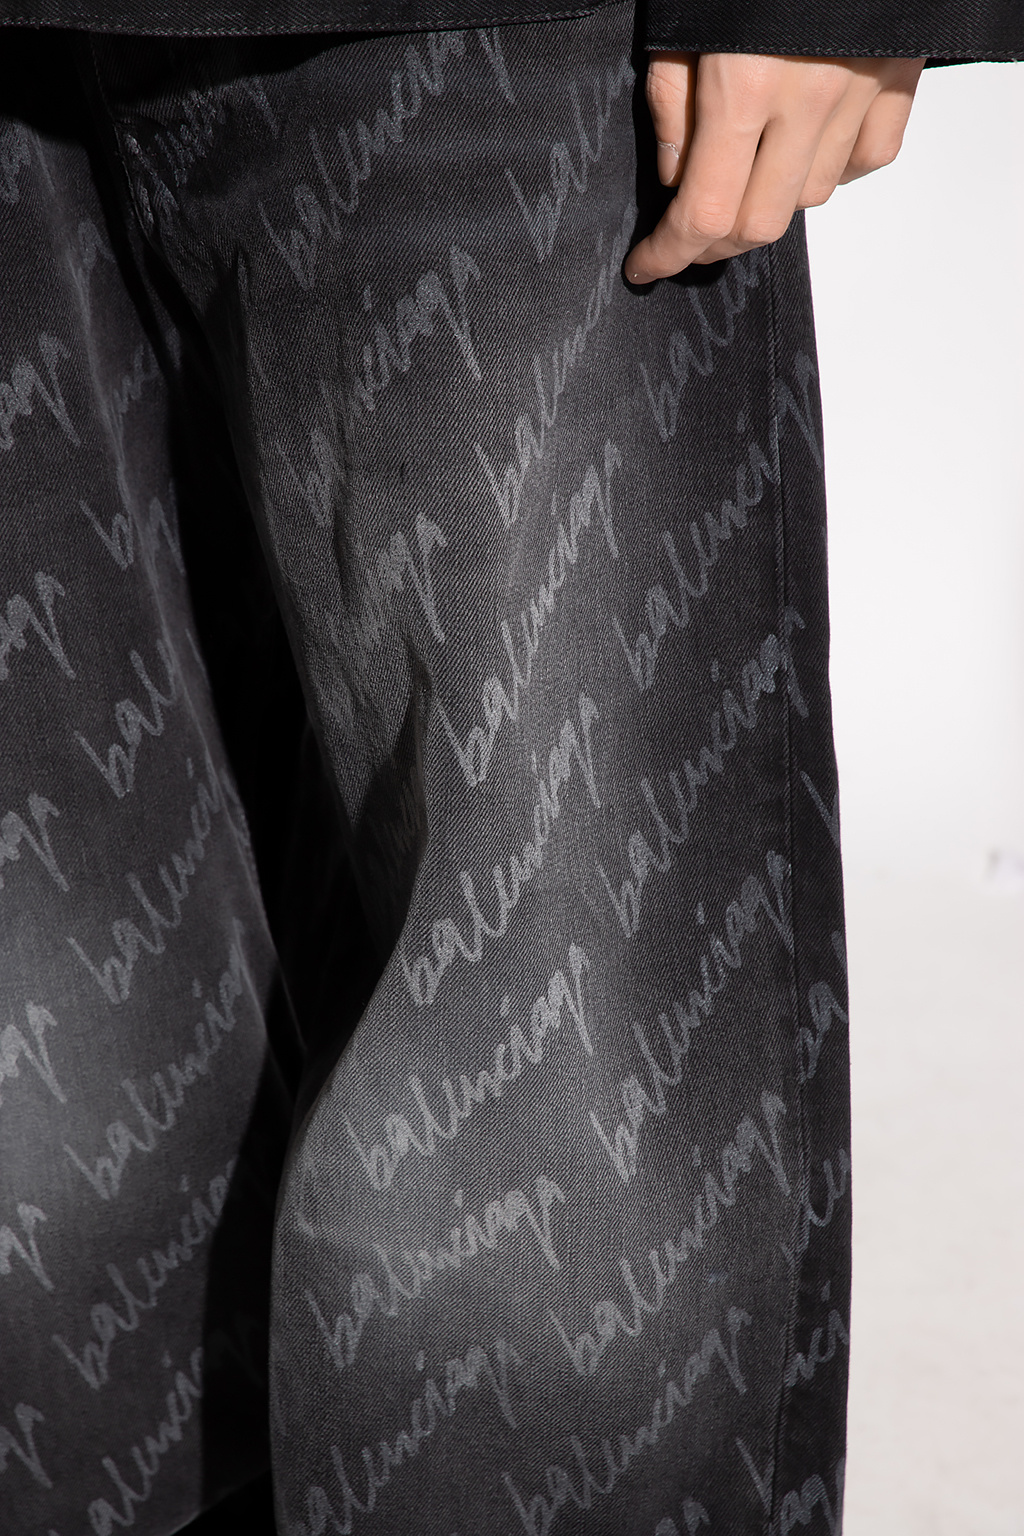 Louis Vuitton Harlequin Sleeve Leather Jacket BLACK. Size 38